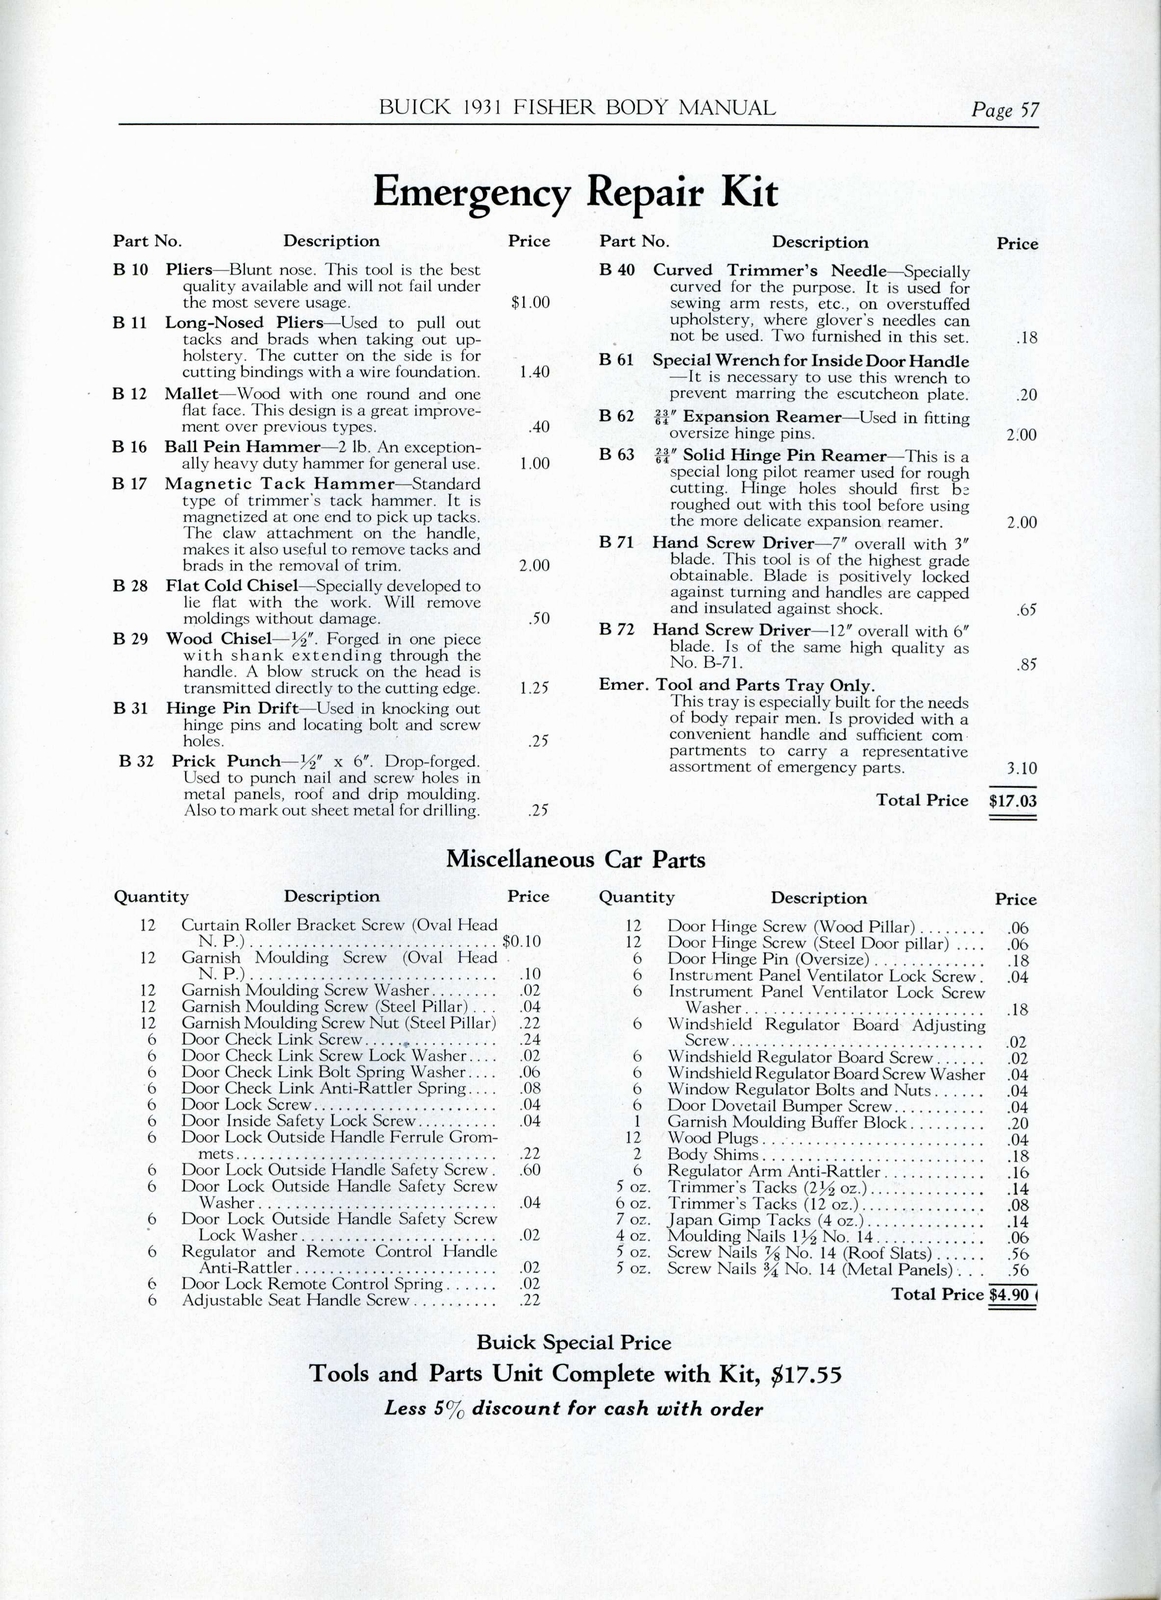 n_1931 Buick Fisher Body Manual-57.jpg